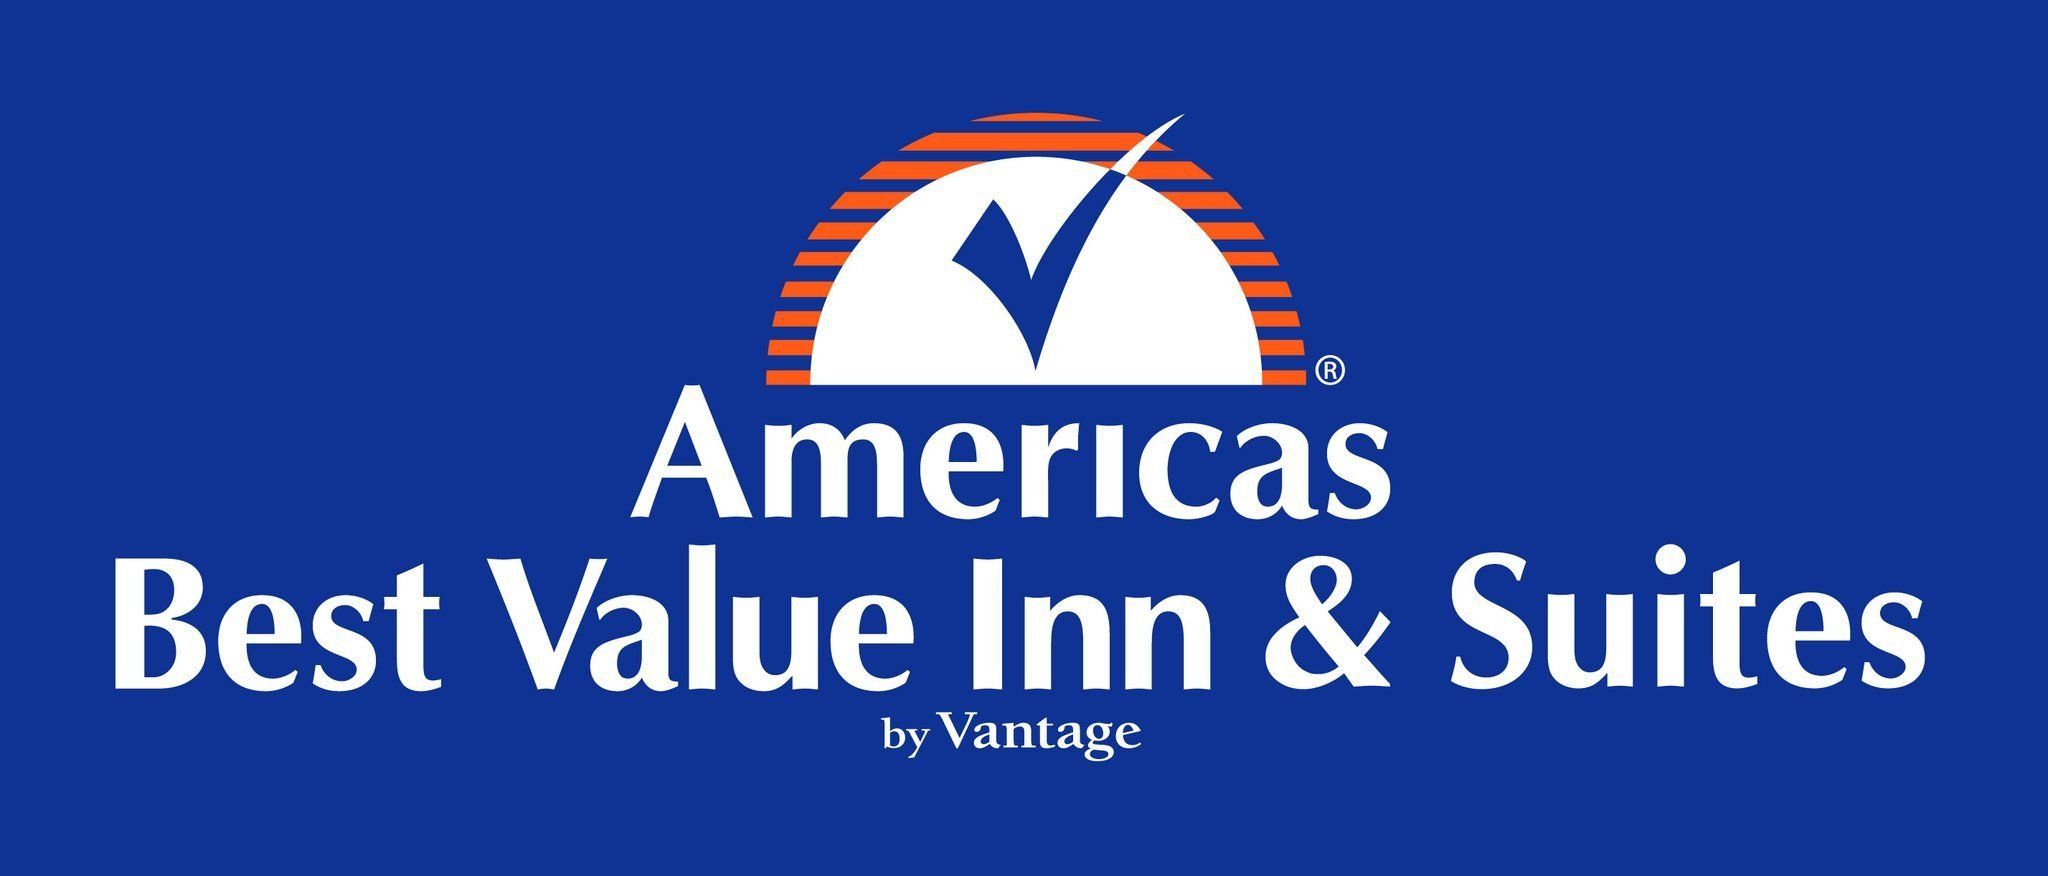 America's Best Value Inn Winnie TX, hotel Winnie TX, Motel Winnie TX, B&B Winnie TX, lodging Winnie TX, sleeping rooms Winnie TX, wedding vendor Winnie TX